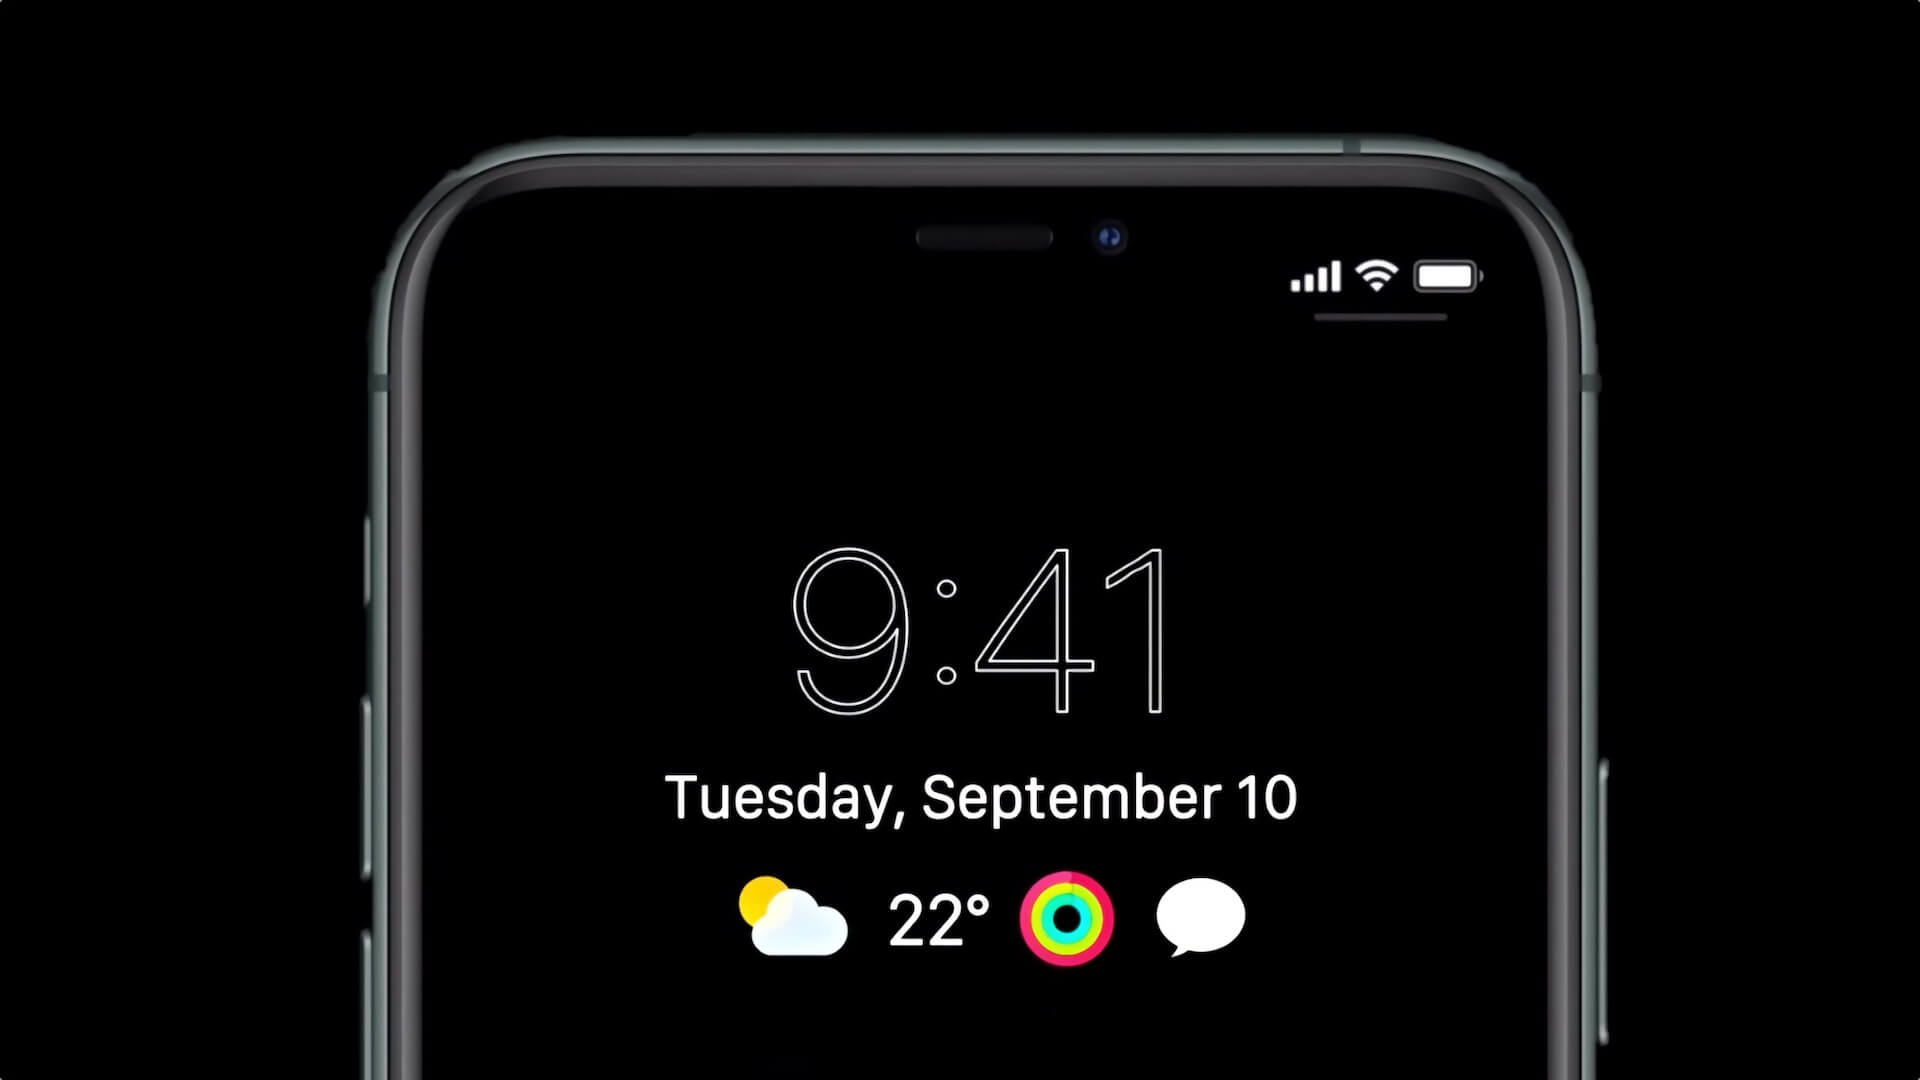 iPhone Always On Display